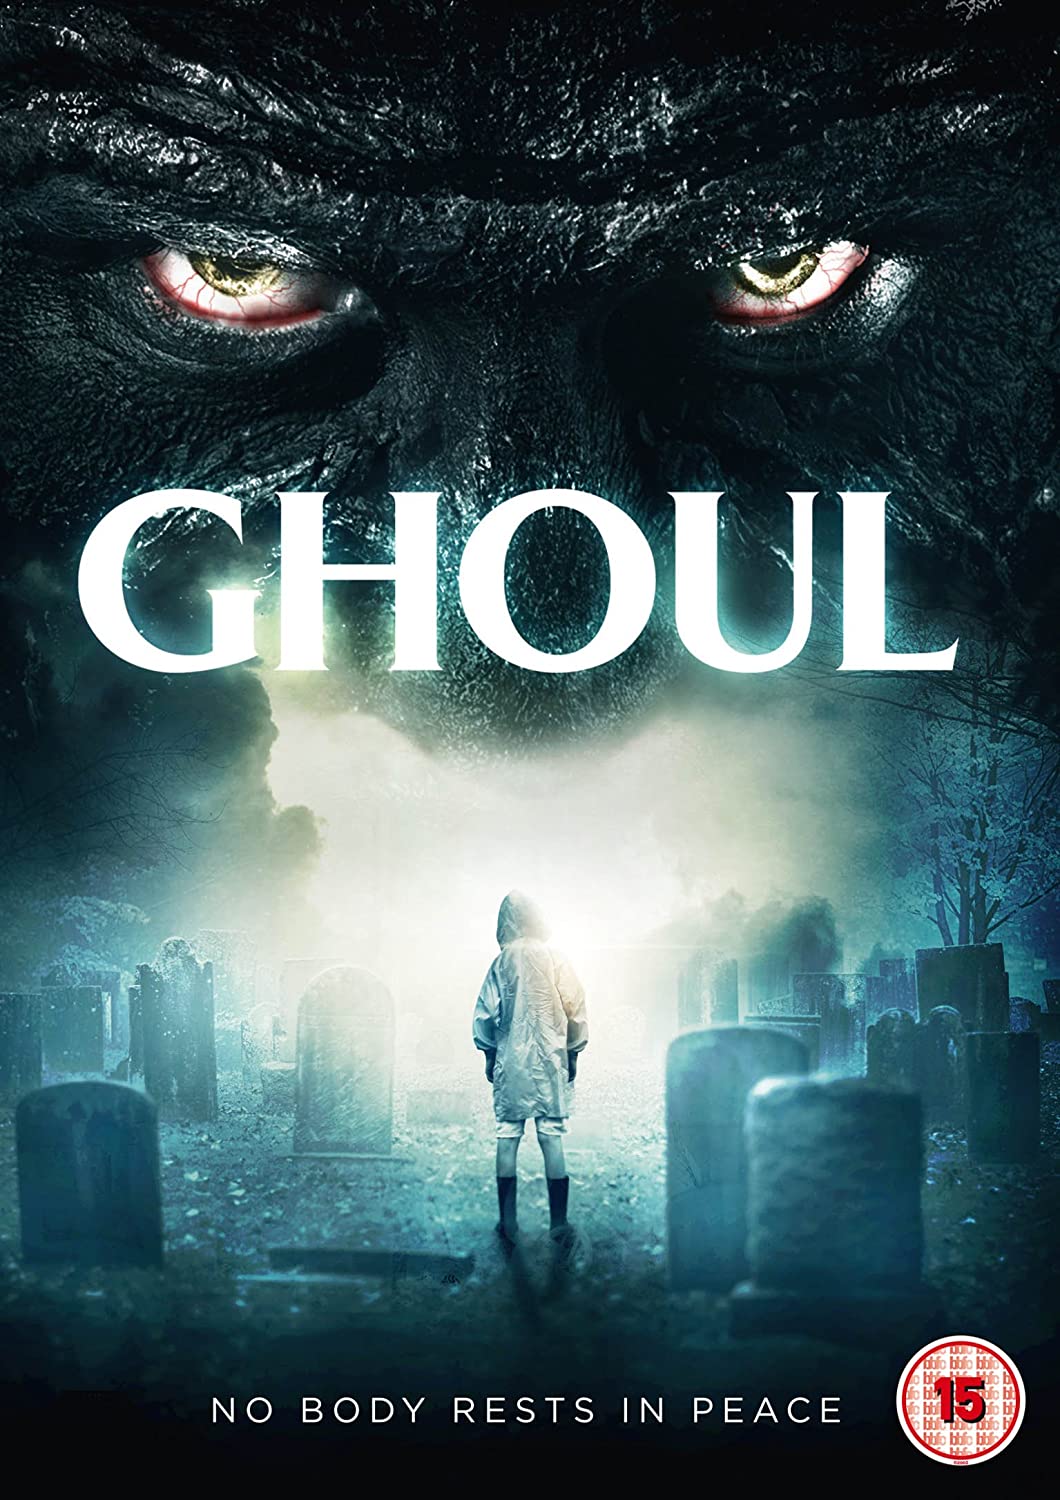 Ghoul [DVD]